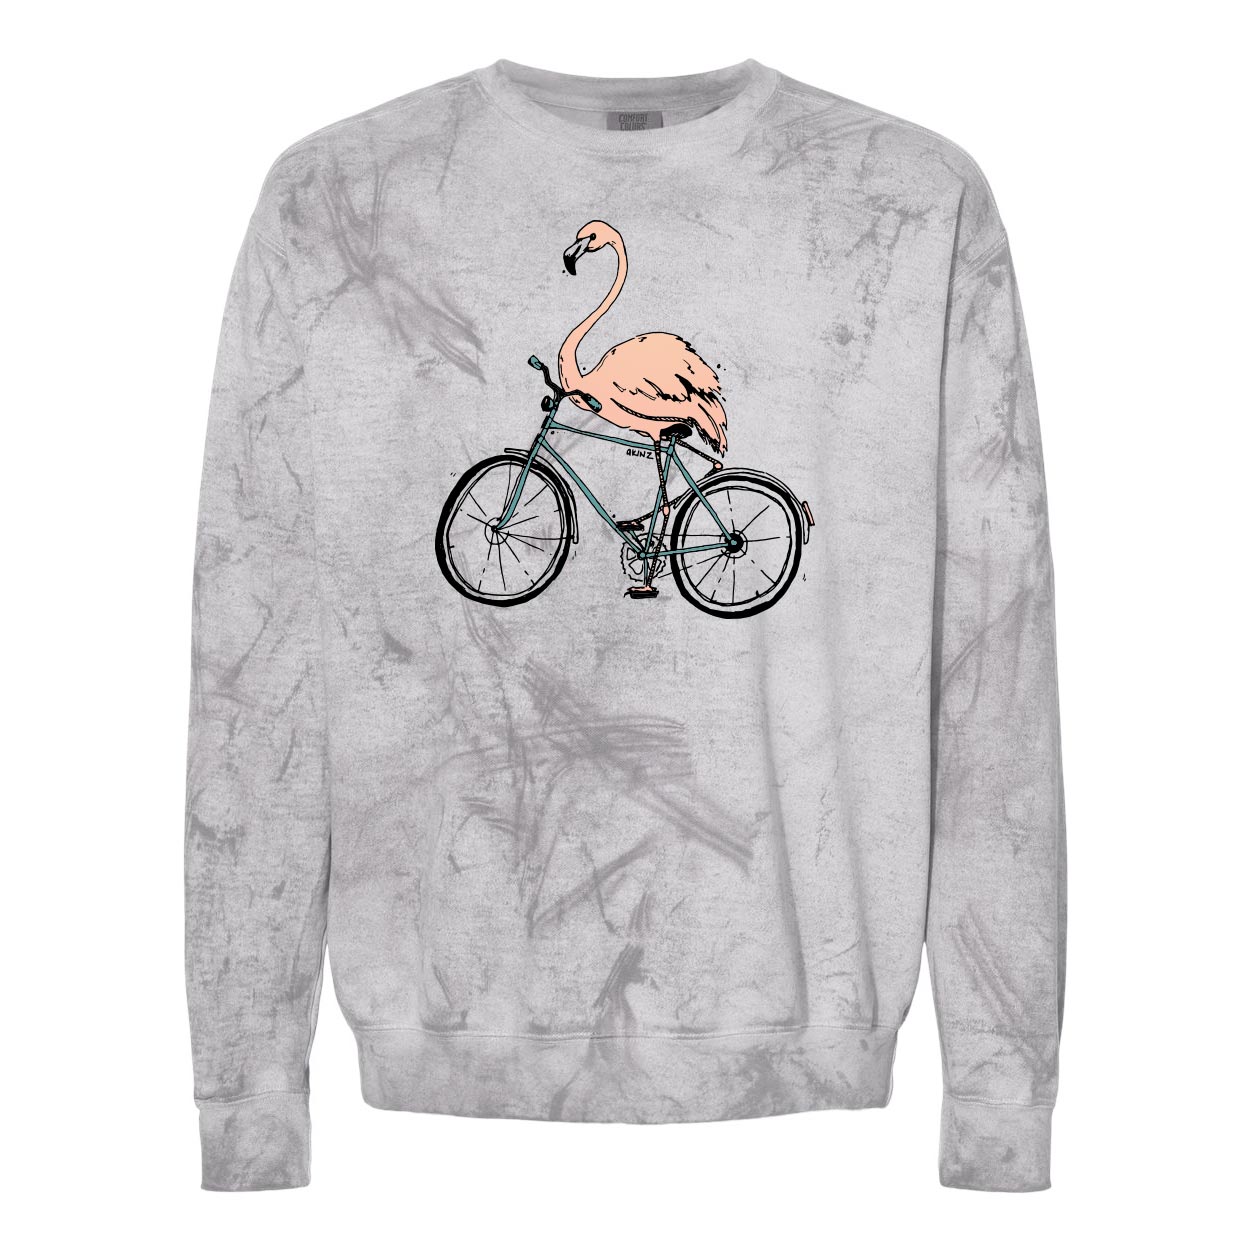 flamingo-bike-handlebars-crewneck-grey-tie-dye.jpg